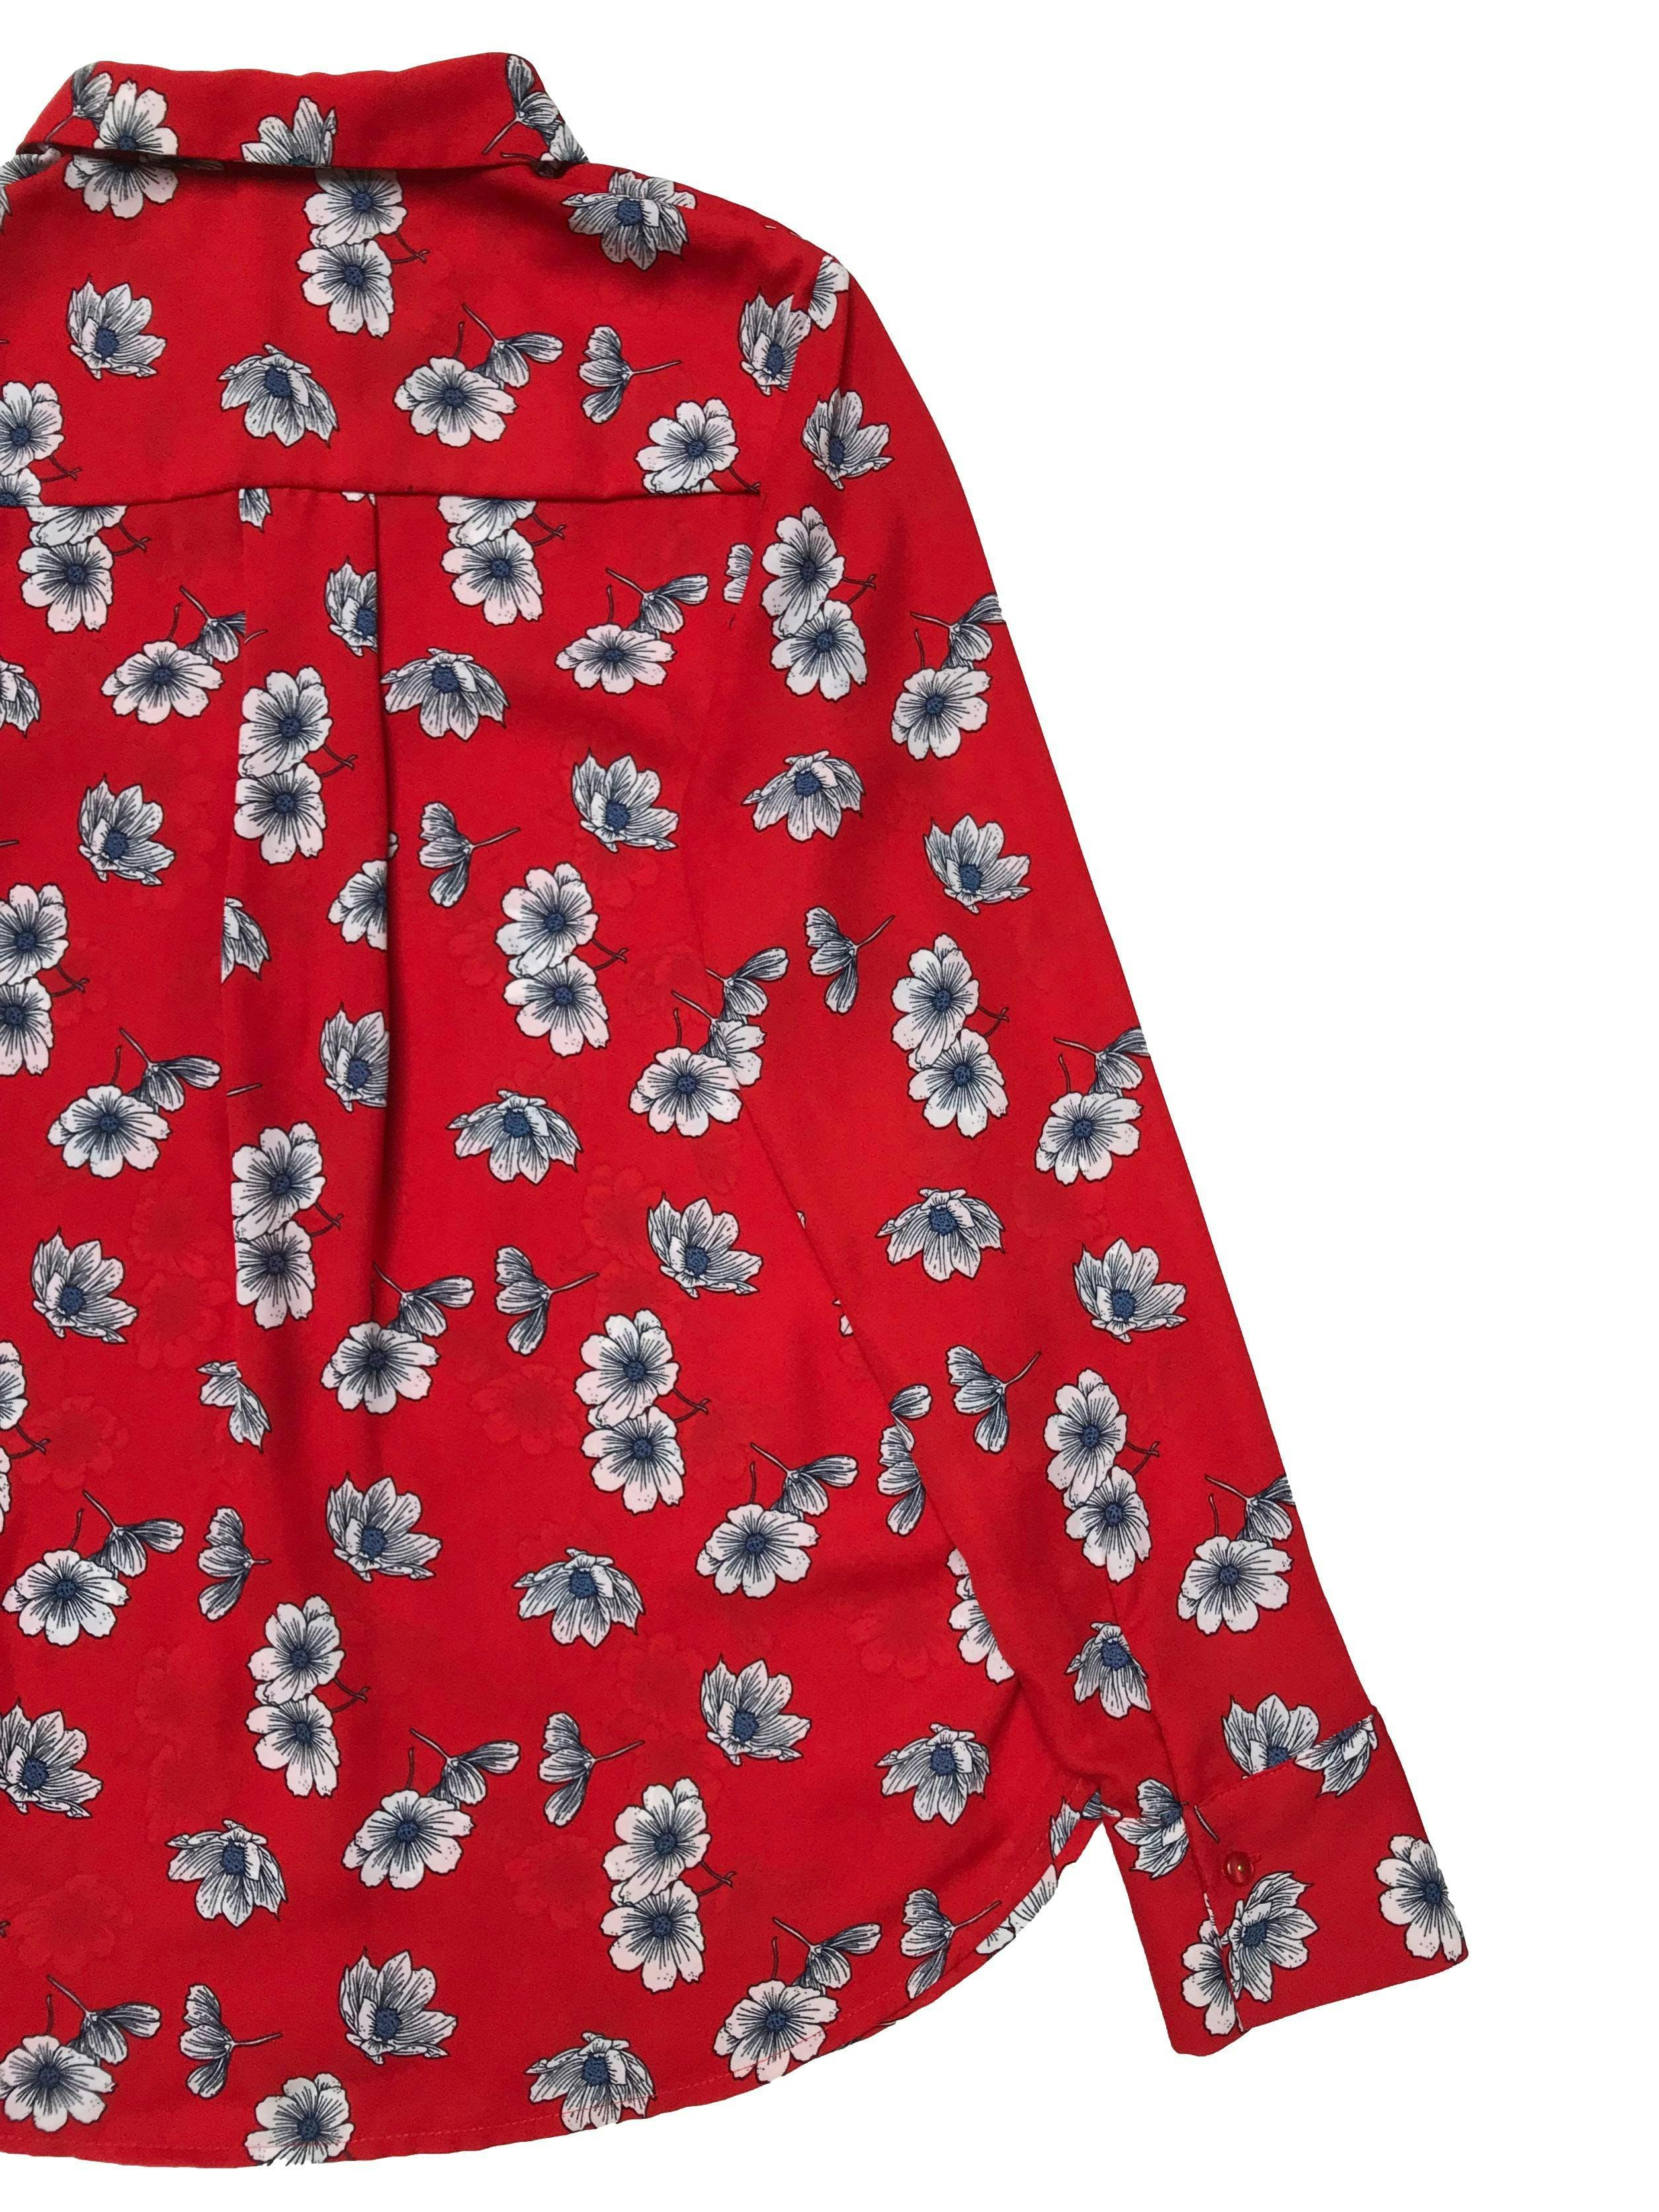 Blusa Kiabi tipo gasa gruesa roja con print de flores, modelo camisero con bolsillo en el pecho, regular fit. Busto 100cm Largo 64cm.